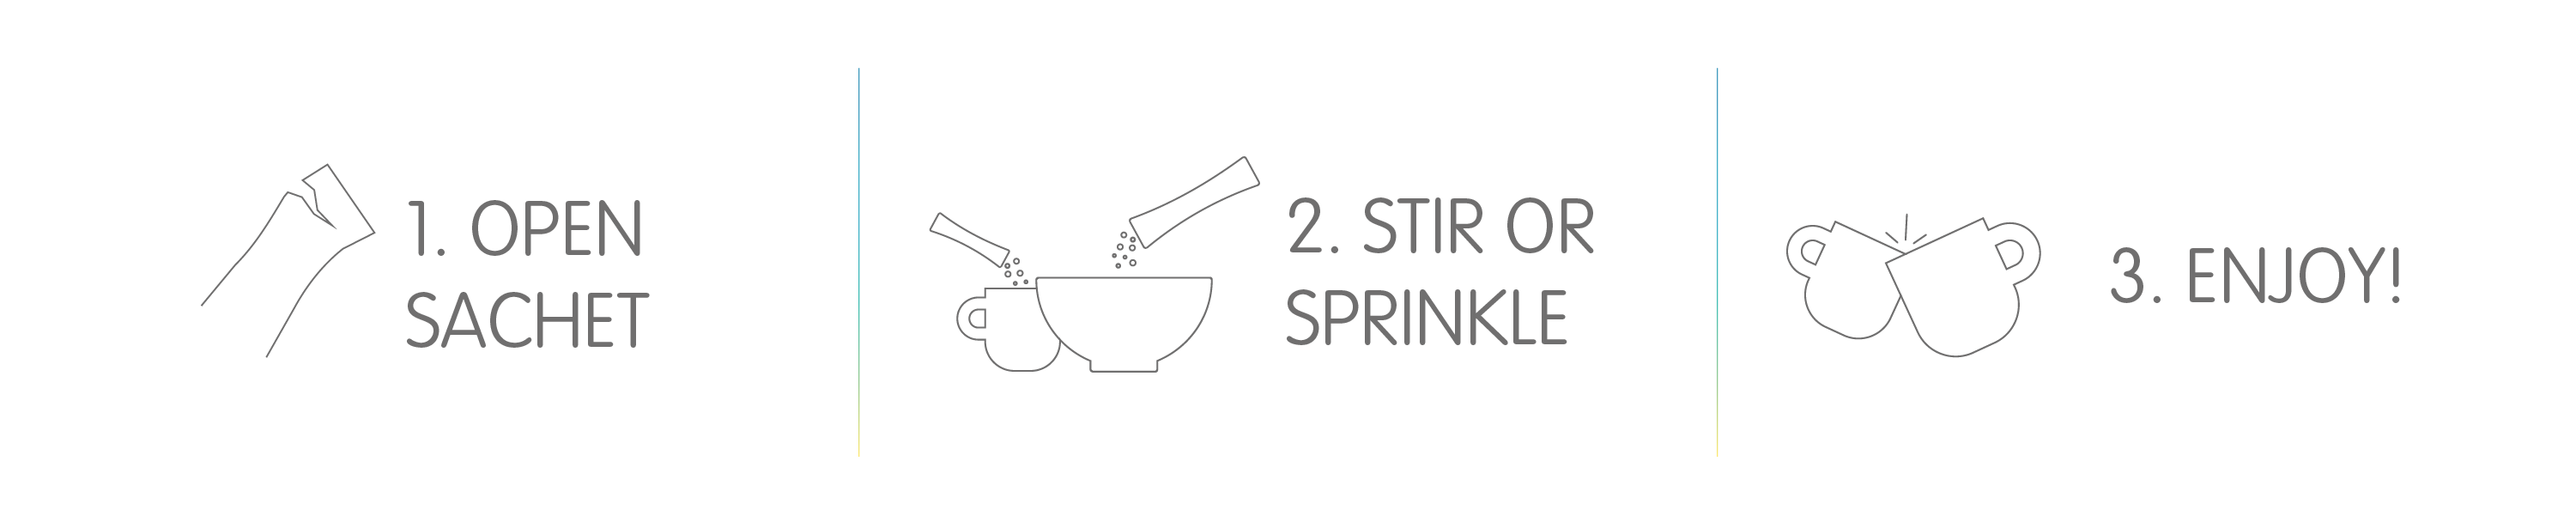 Open Sachet, stir or sprinkle,enjoy